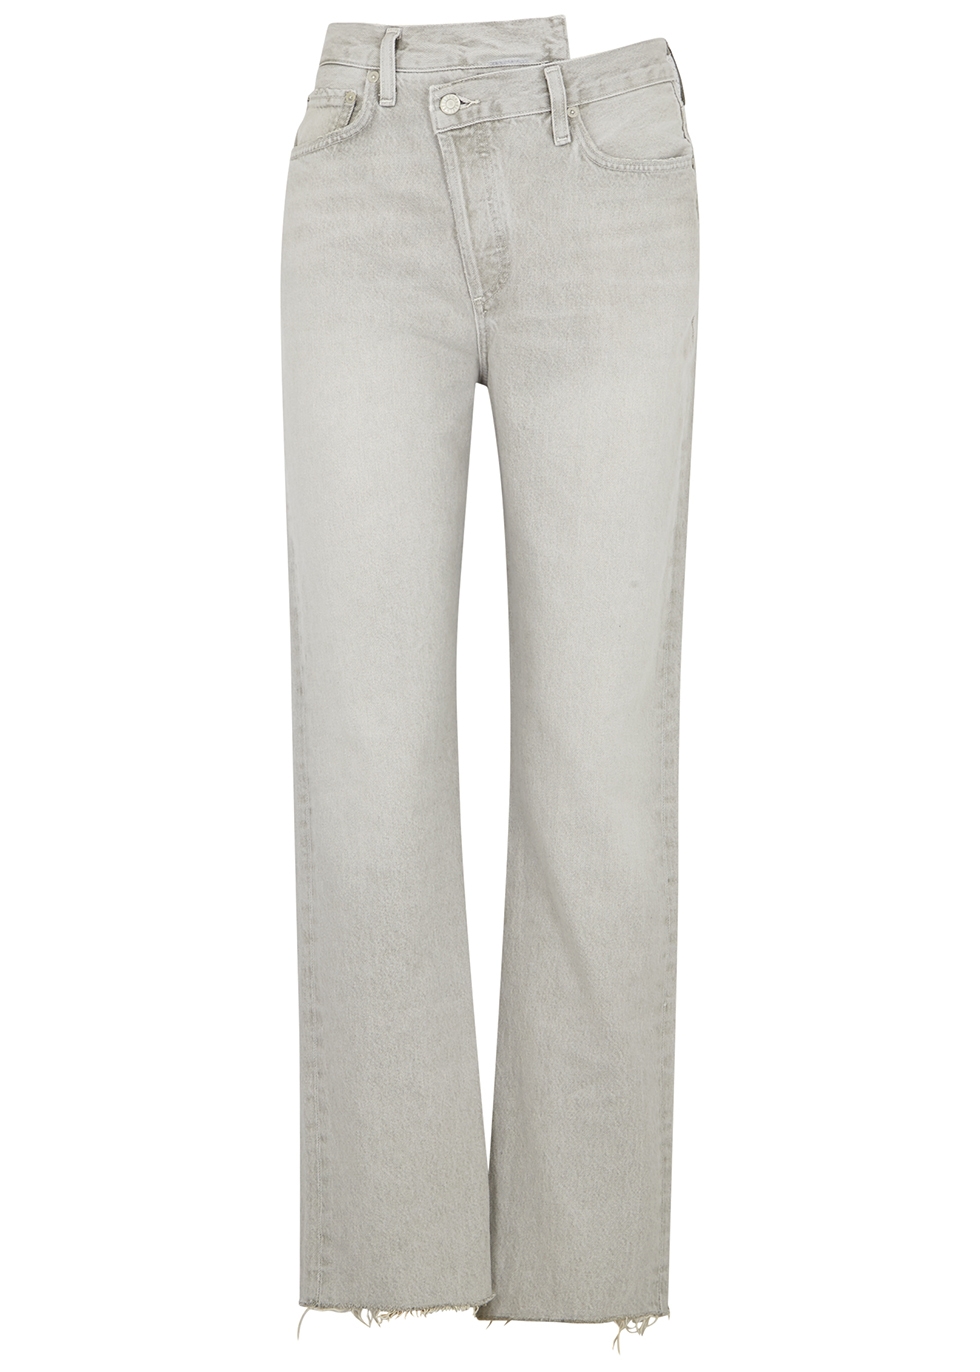 Criss Cross light grey straight-leg jeans